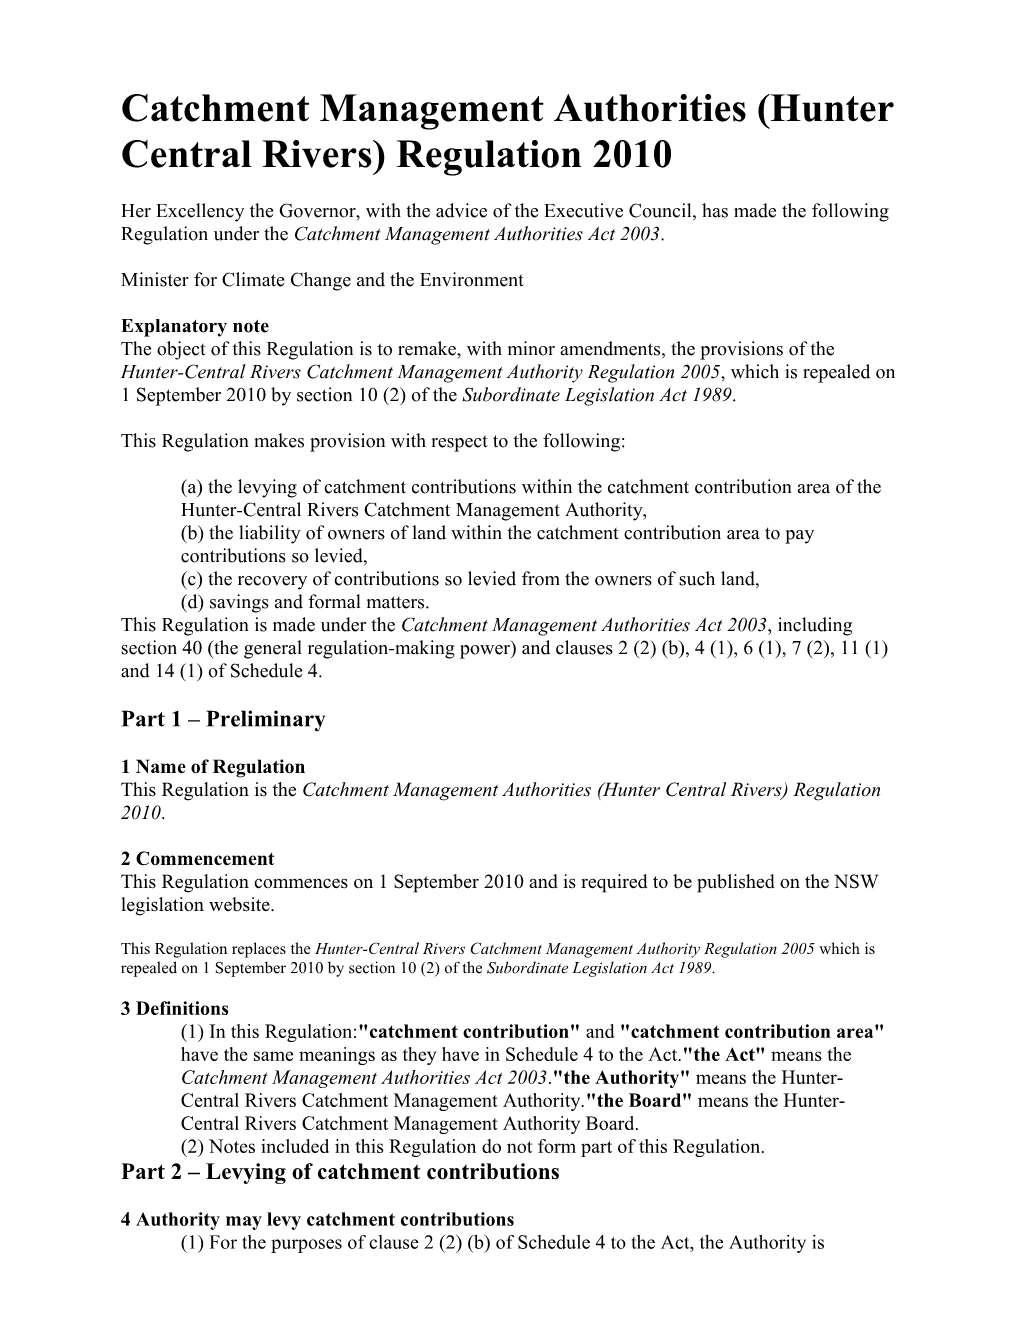 Catchment Management Authorities (Hunter Central Rivers) Regulation 2010